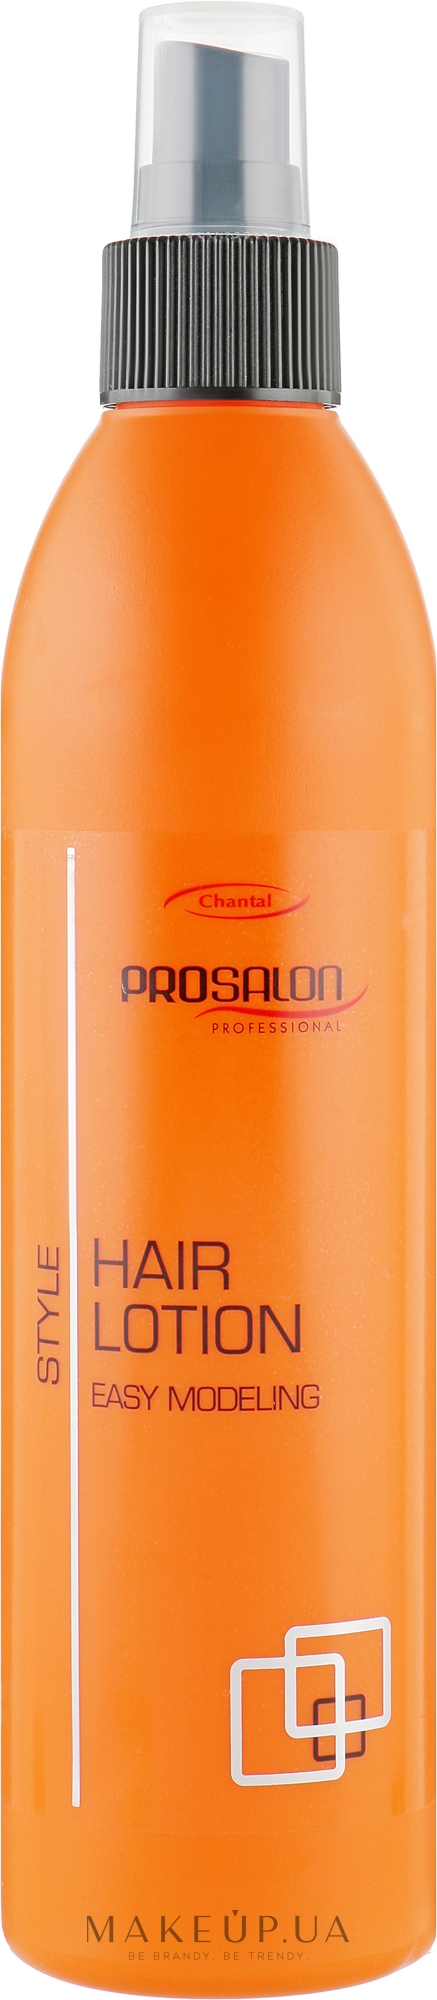 Лосьон-спрей для укладки волос нормальной фиксации - Prosalon Styling Easy Modeling Hair Lotion — фото 275g